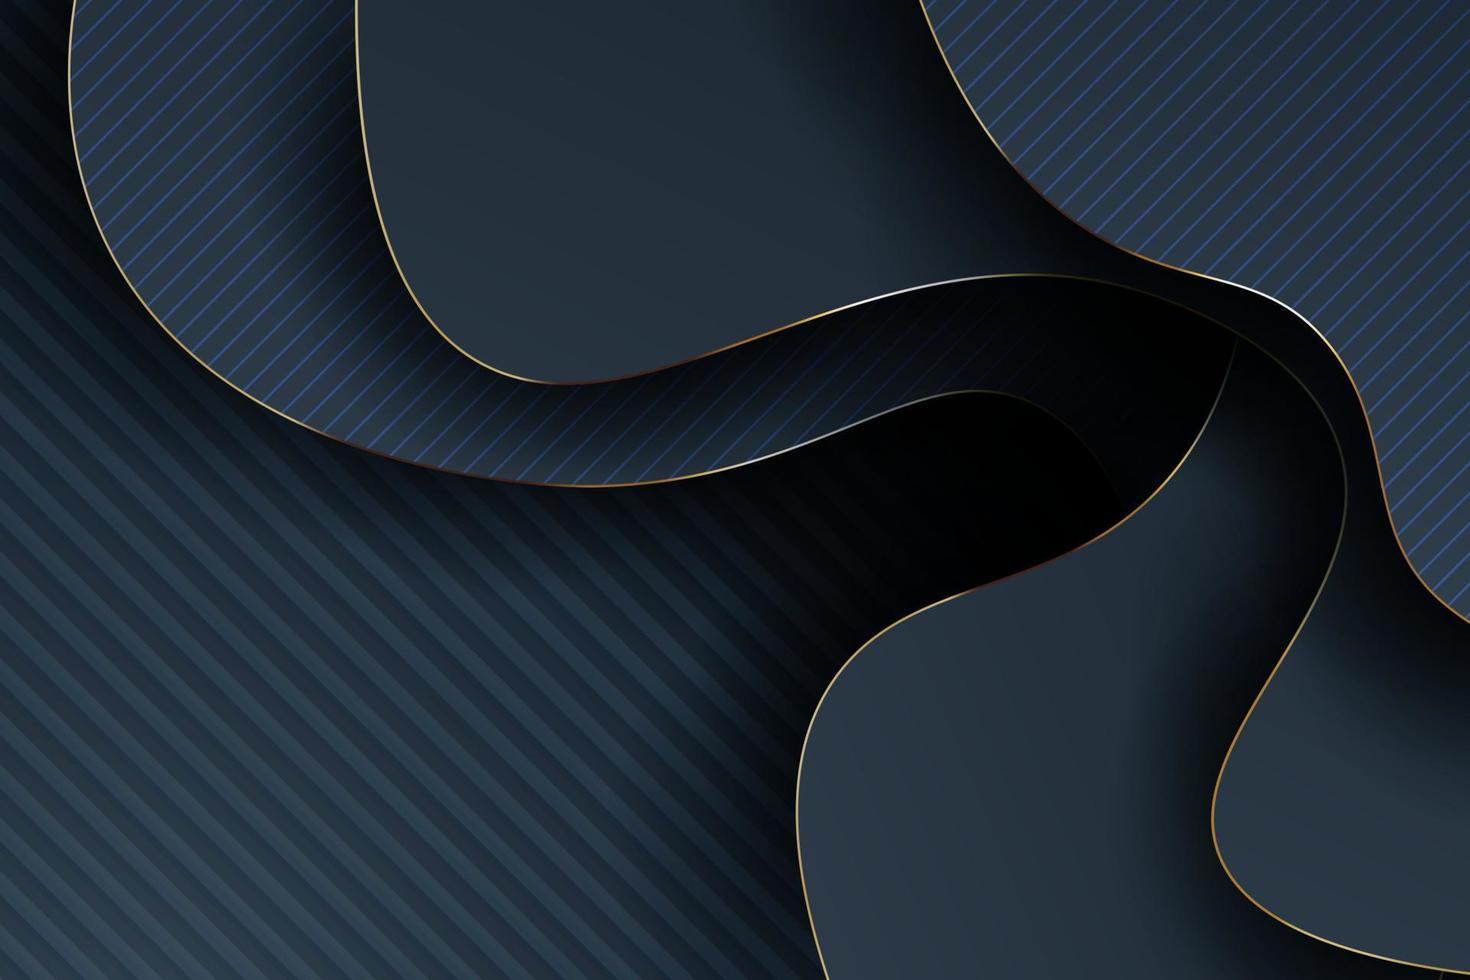 azul marino oscuro abstracto ondulado con capas superpuestas y fondo de línea dorada. eps10 vector